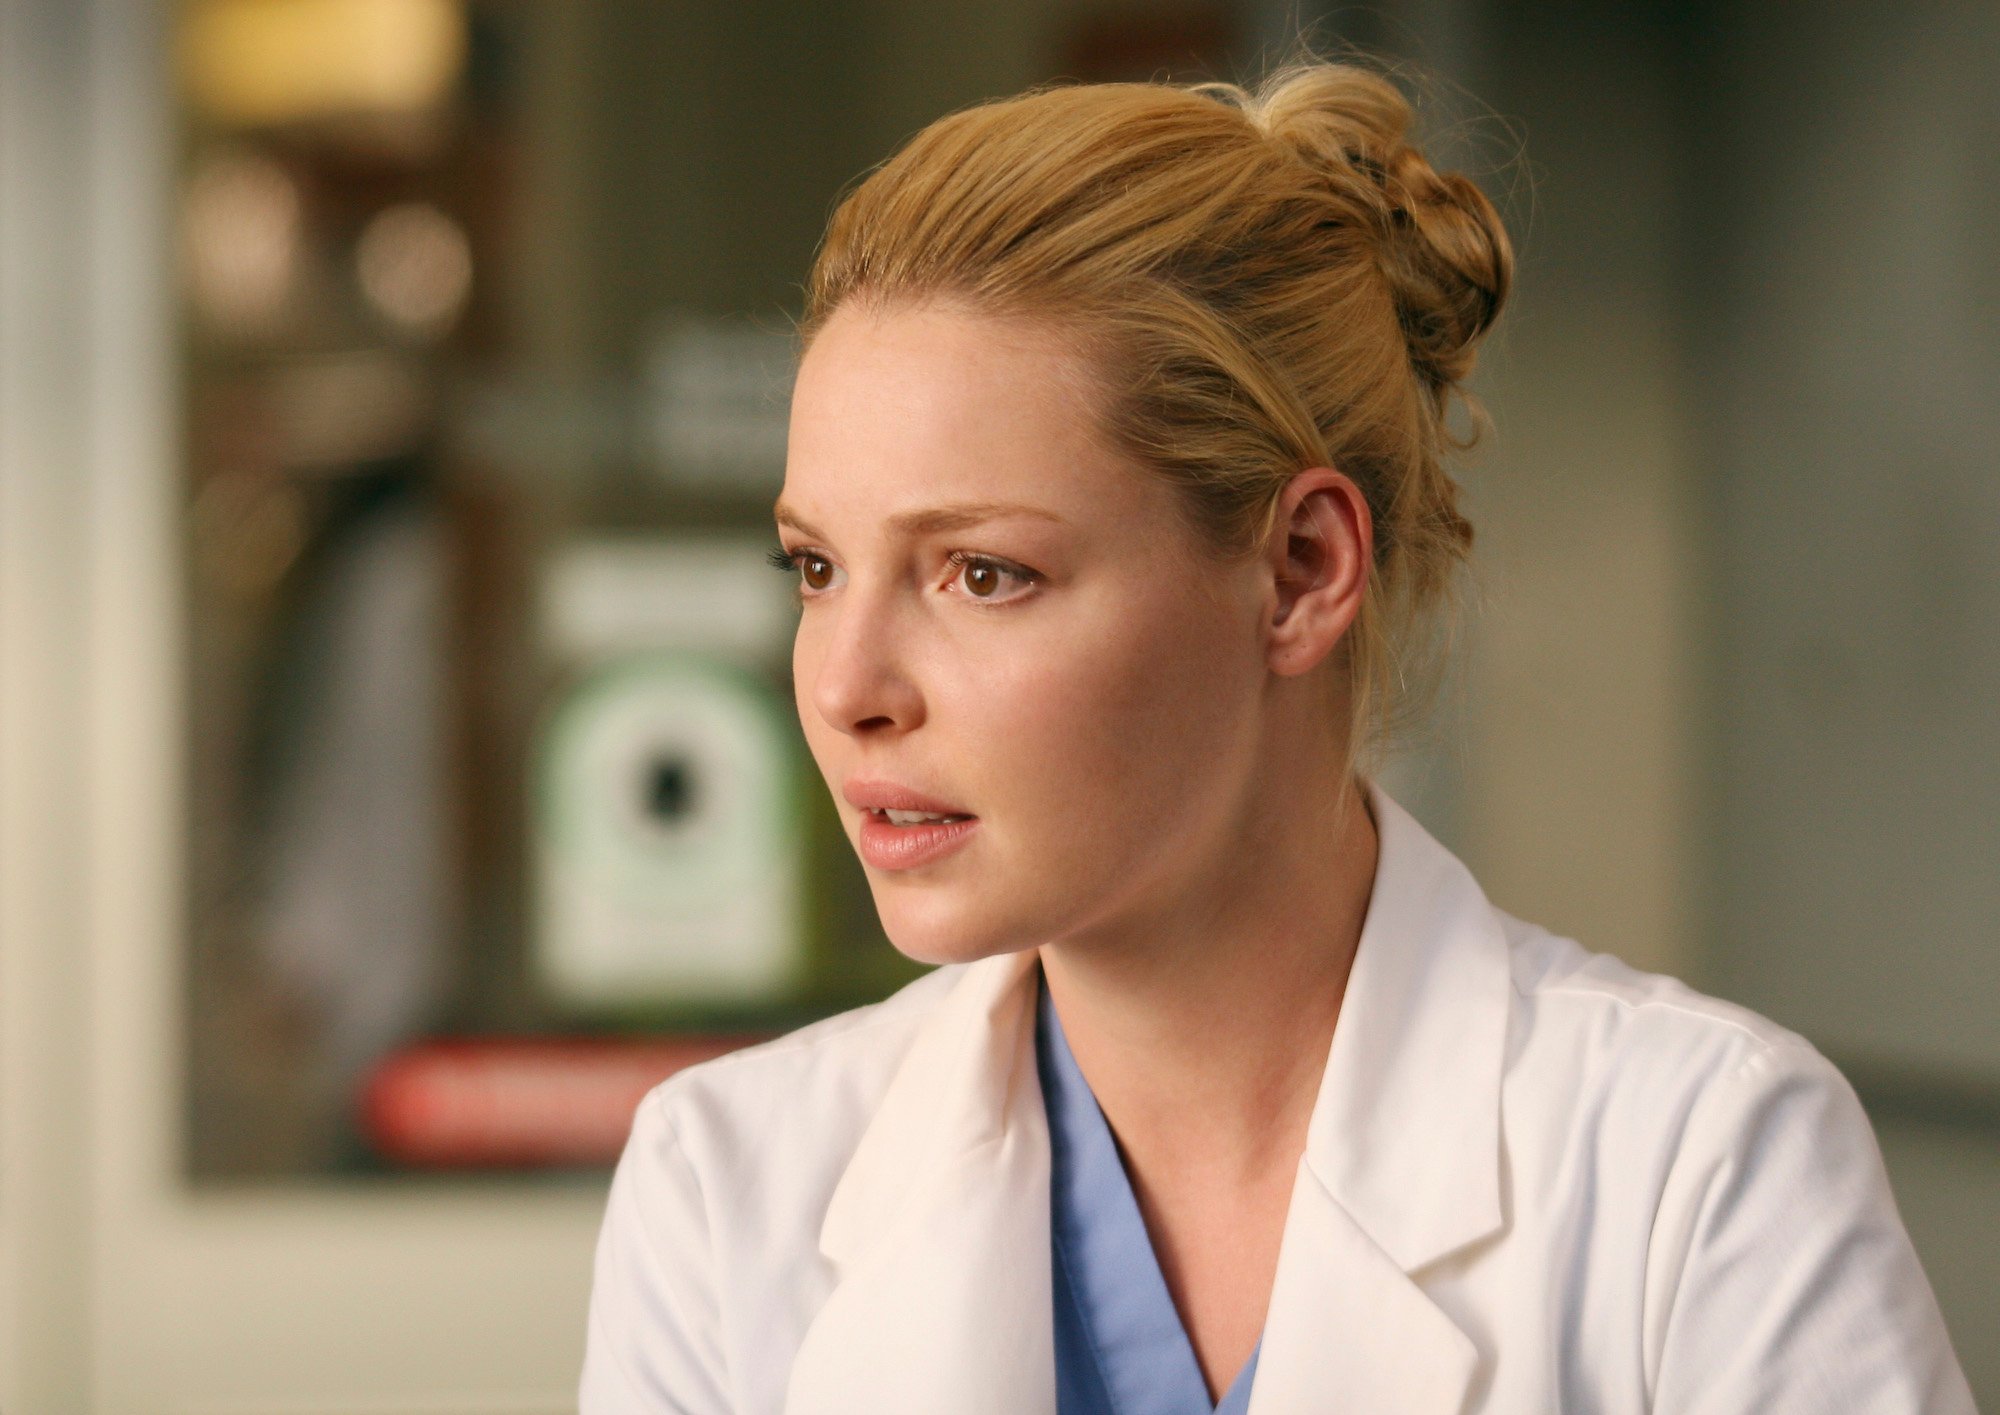 Katherine Heigl dressed in white scrubs on 'Grey's Anatomy'